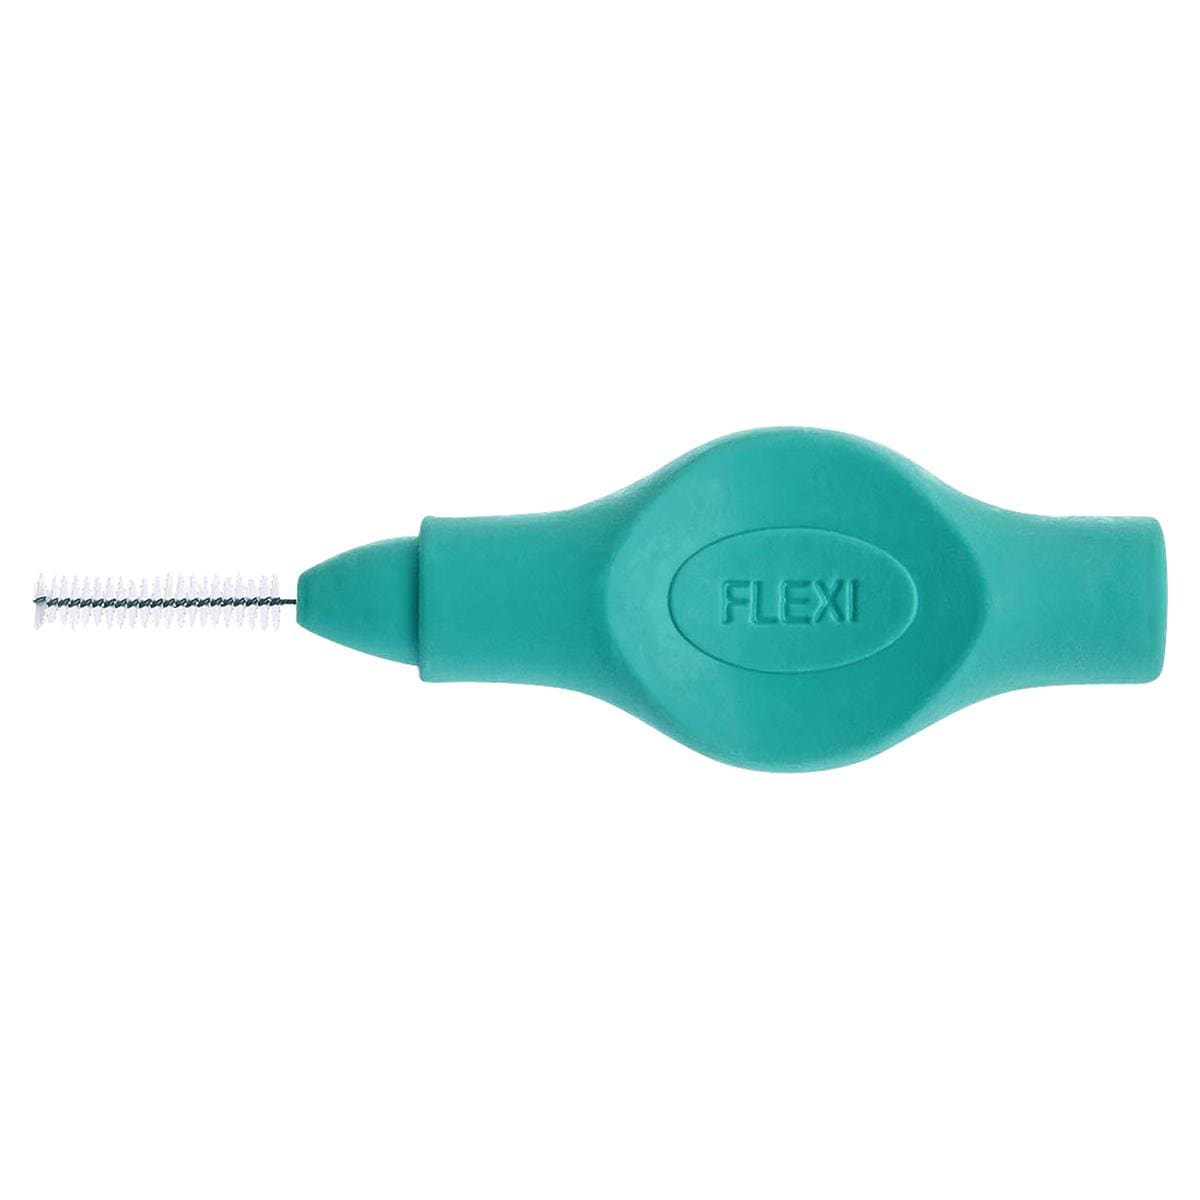 Flexi Interdentalbürsten - Value Pack - Turquoise - X-Micro, Bürsten-Ø 0,6 mm, Draht-Ø 0,35 mm